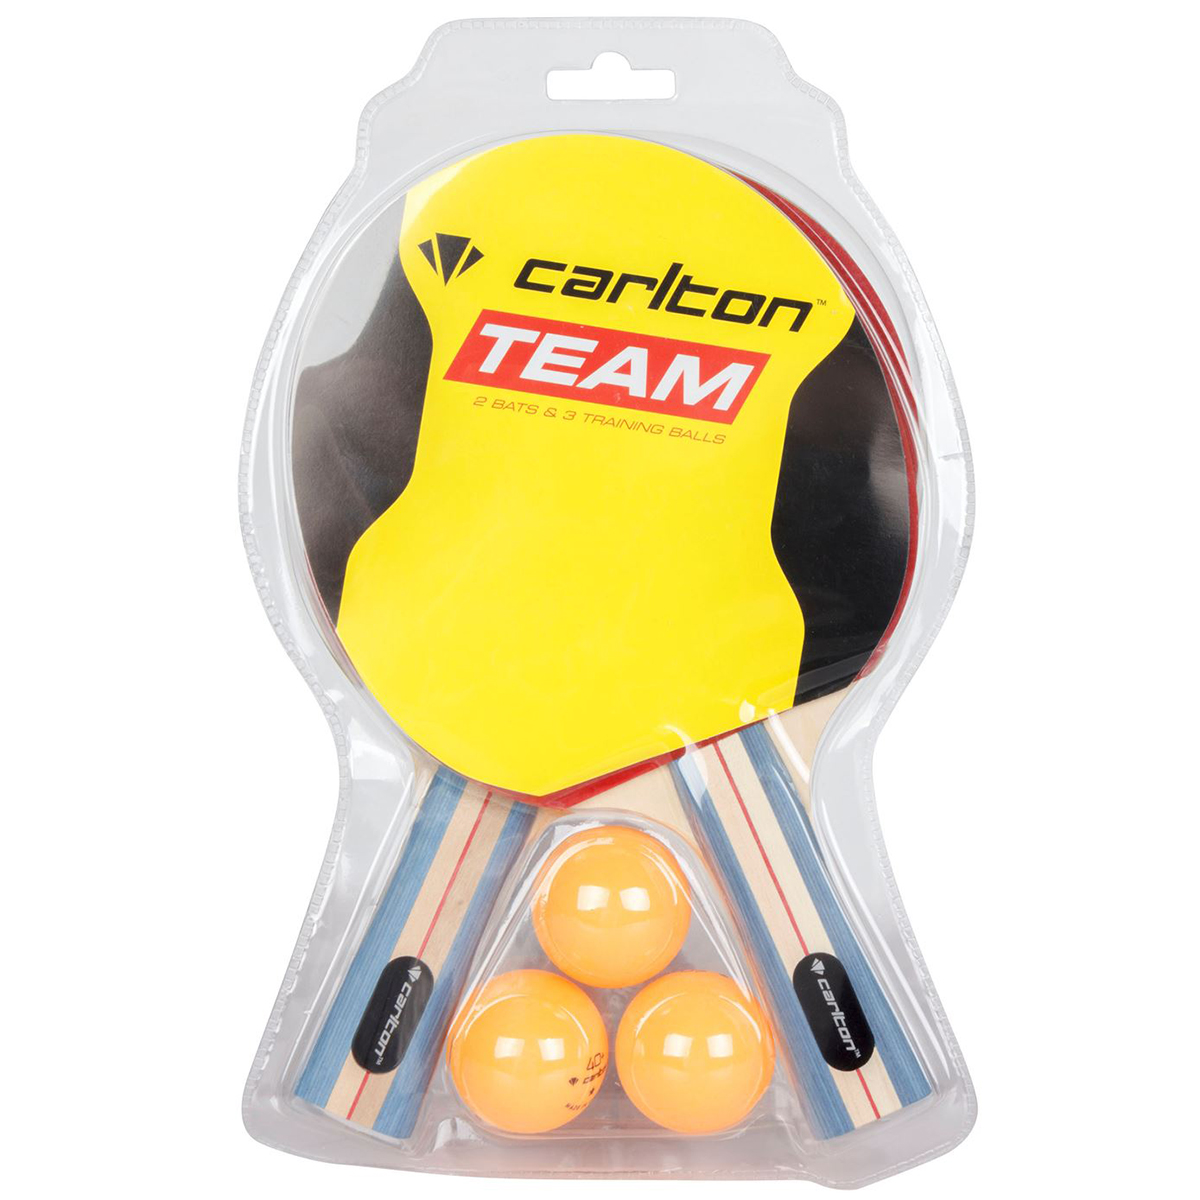 Carlton 2-Player Table Tennis Set